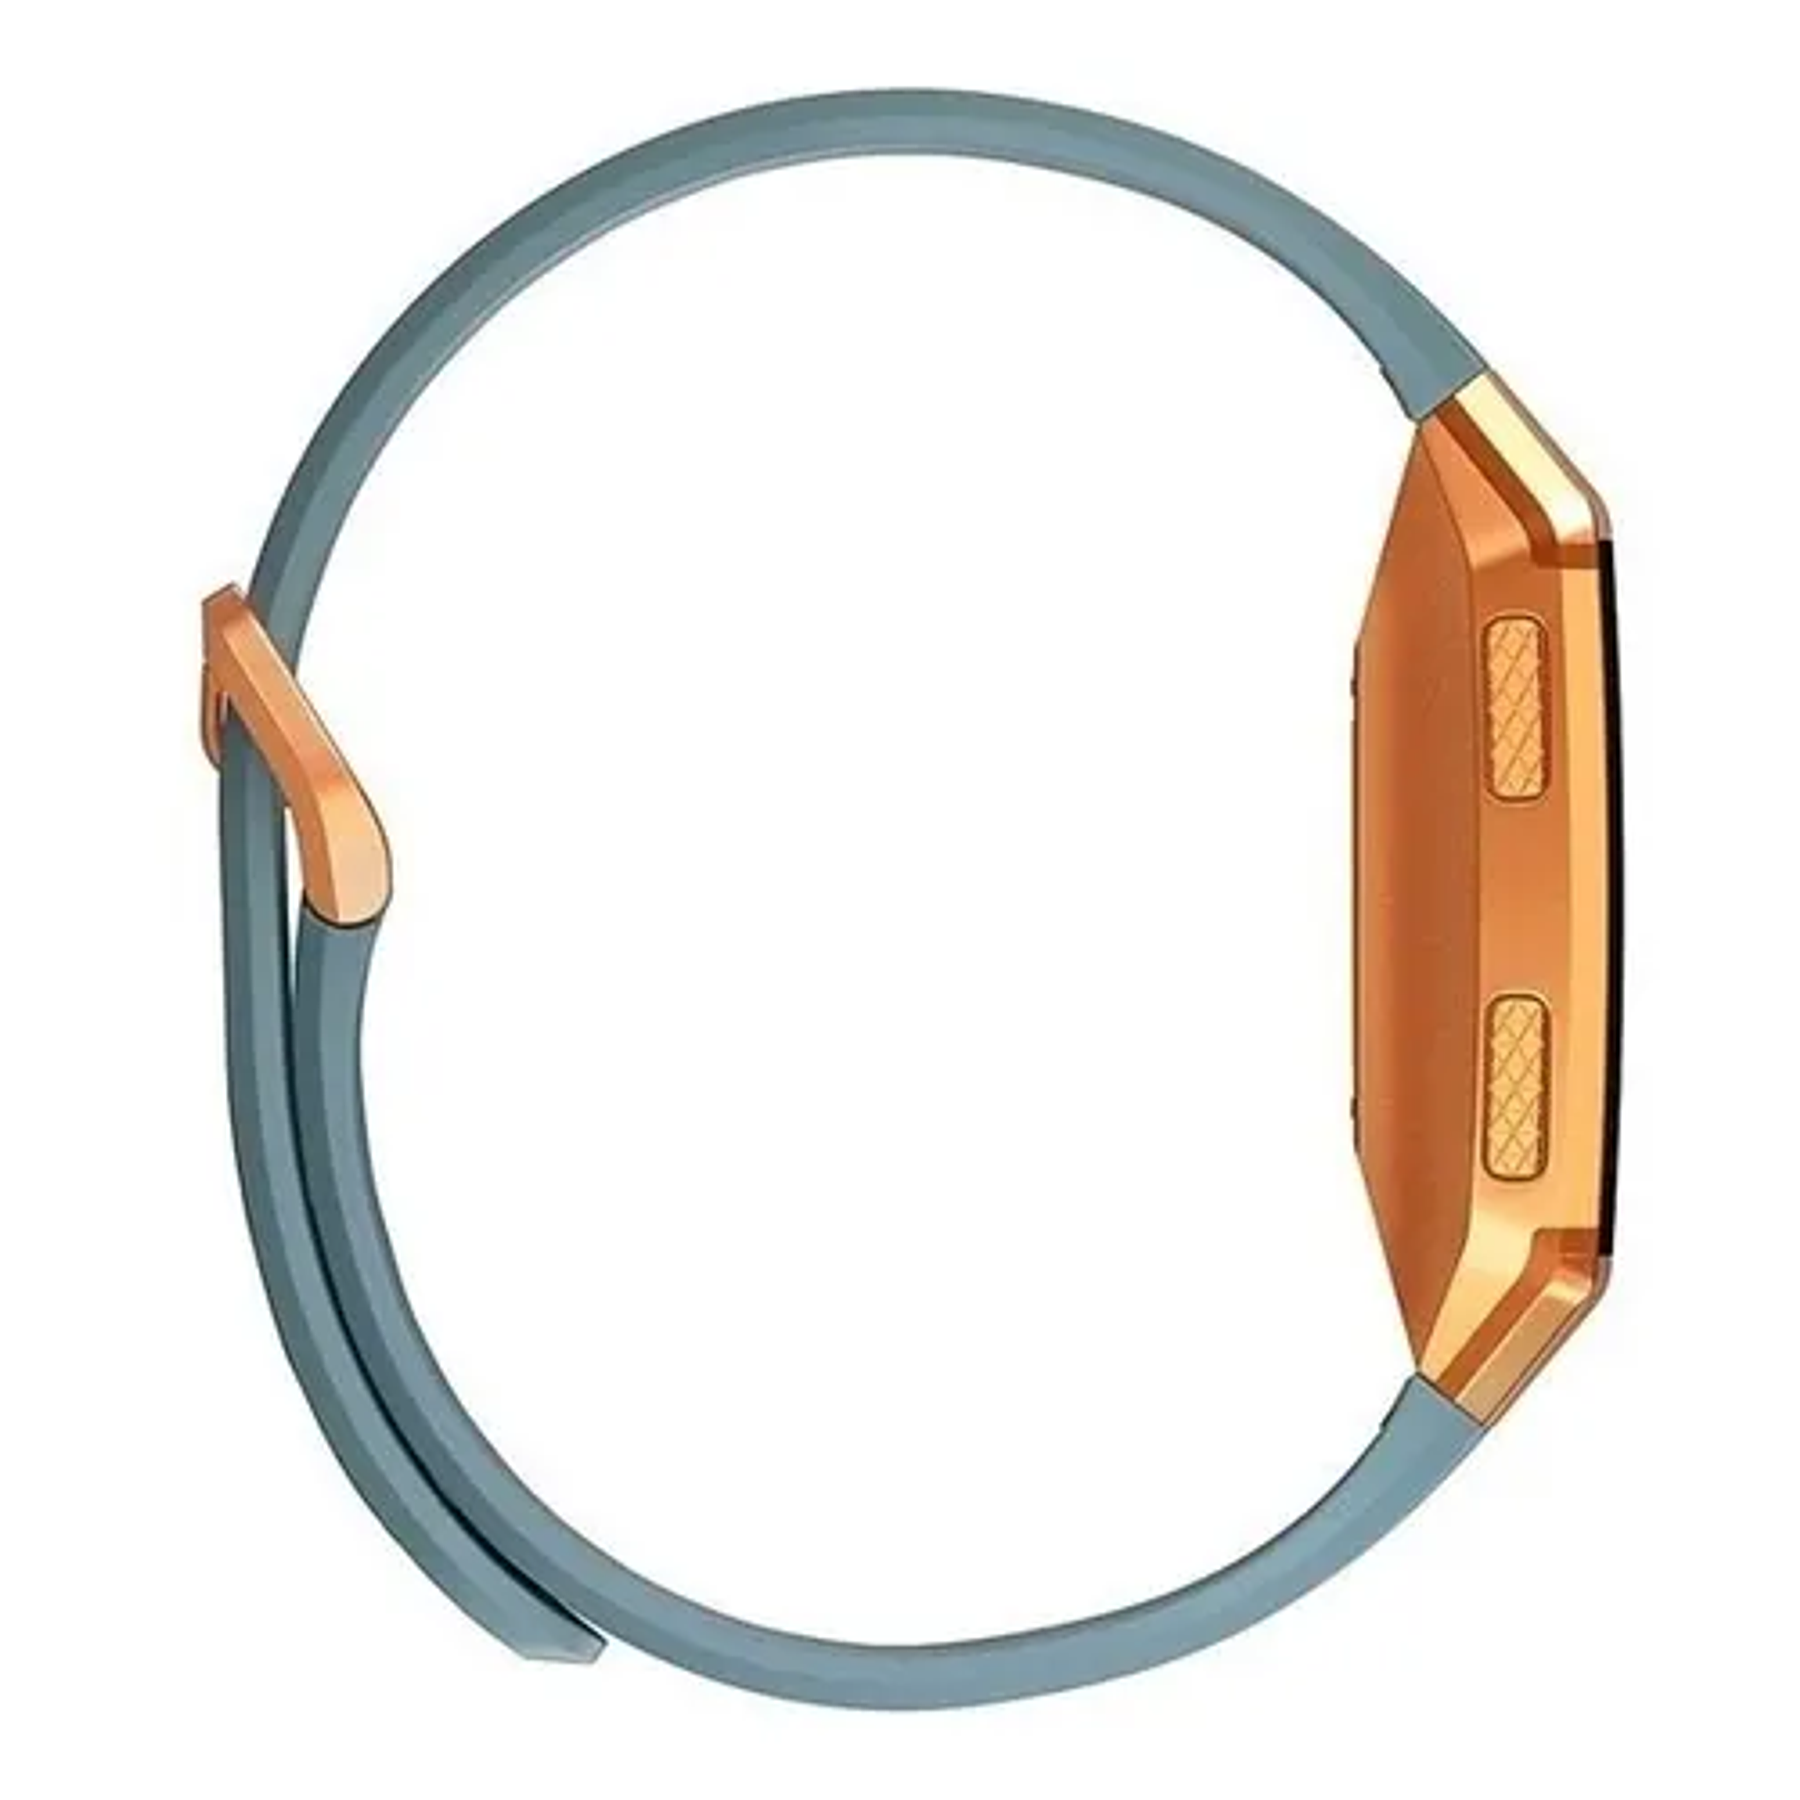 Fibit Ionic Smartwatch Orange